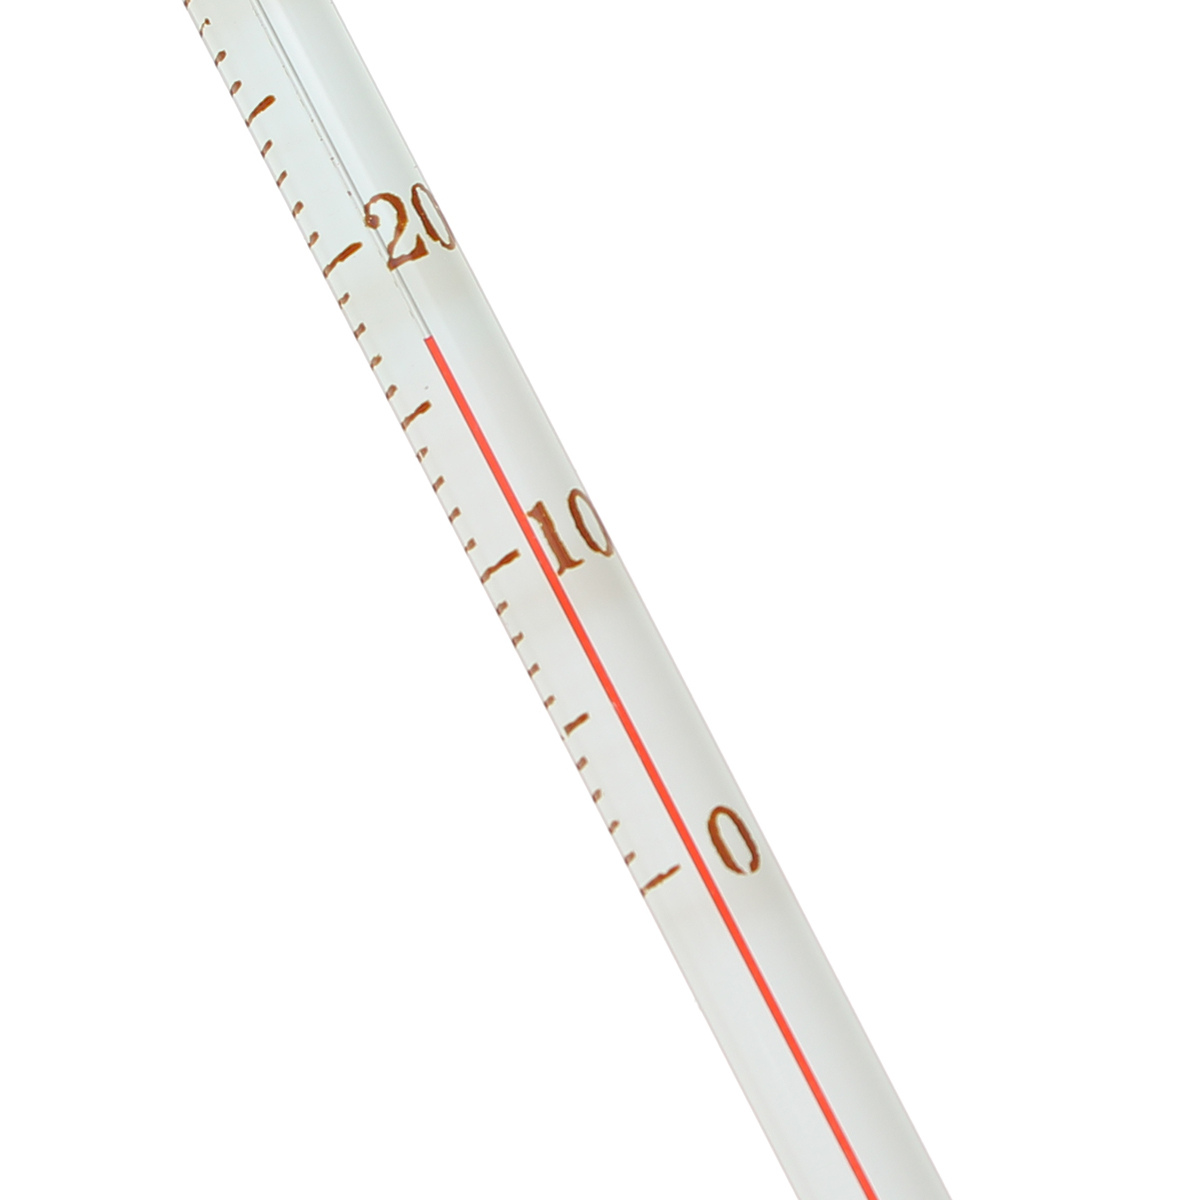 Hydrometer Alkohol Meter Vinometer Tester mit einem Thermometer Gadget SetUUDE 